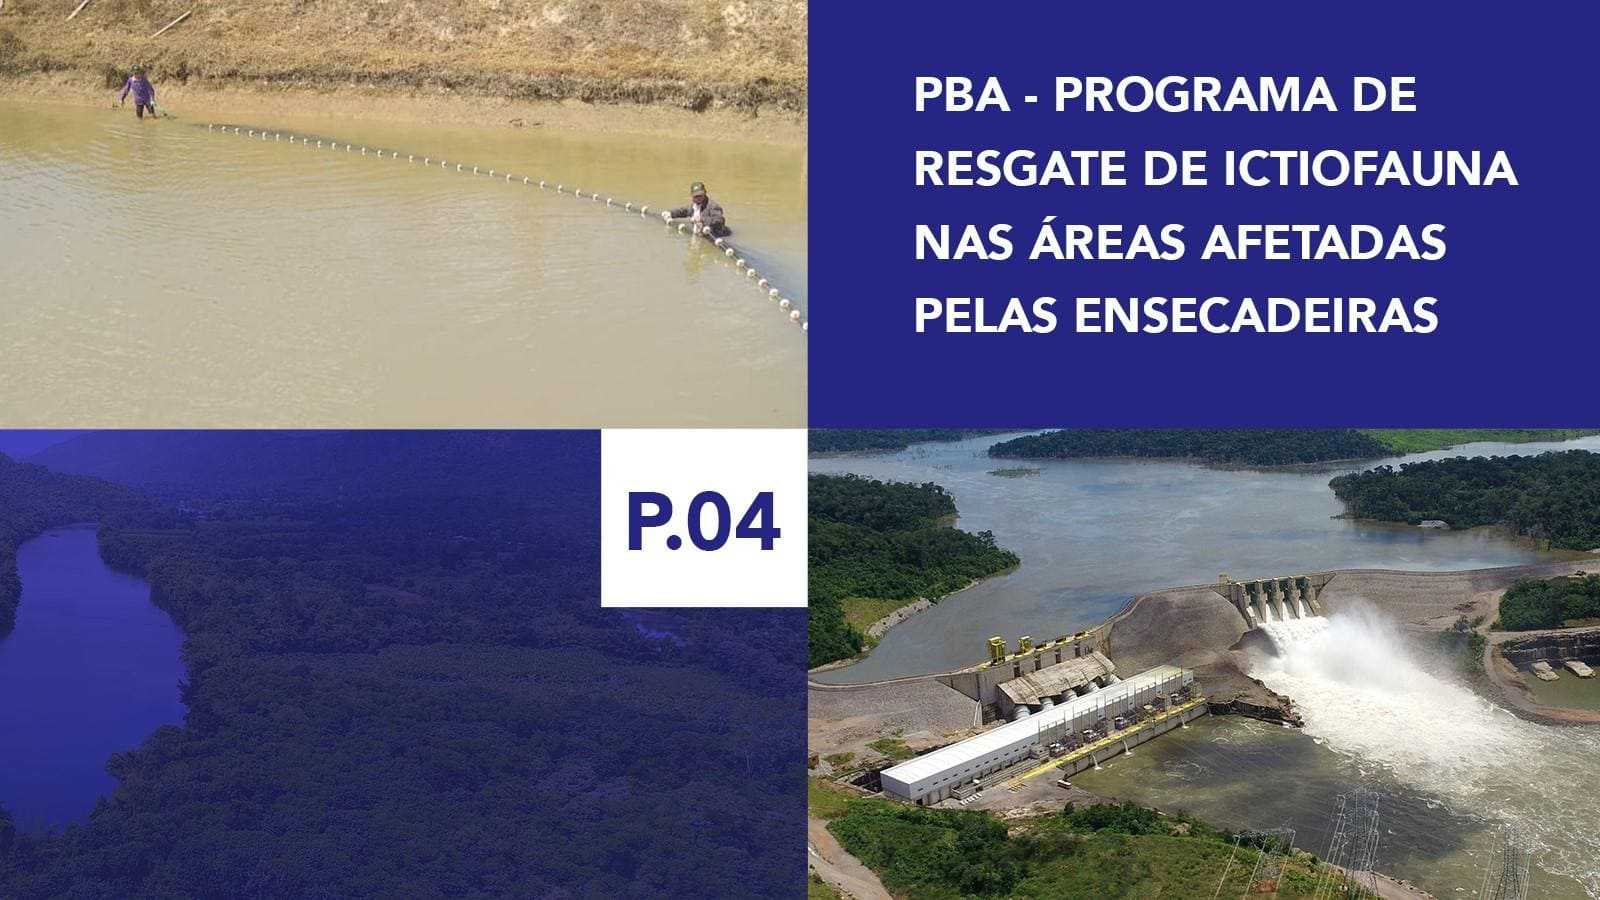 P.04 - Programa de Resgate de Ictiofauna nas Áreas afetadas pelas Ensecadeiras